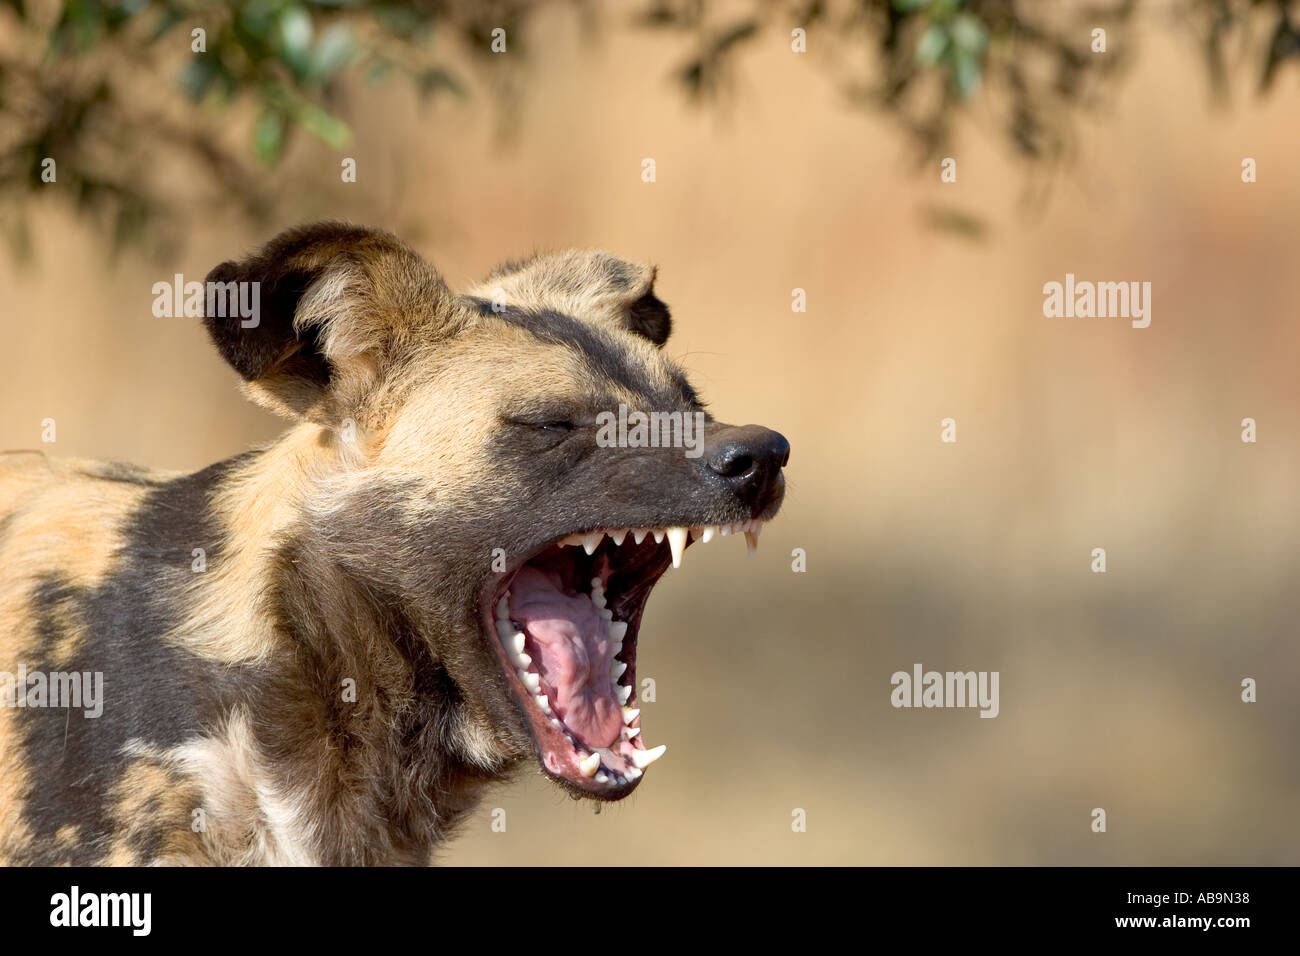 Wild dog African hunting dog painted dog Stock Photo